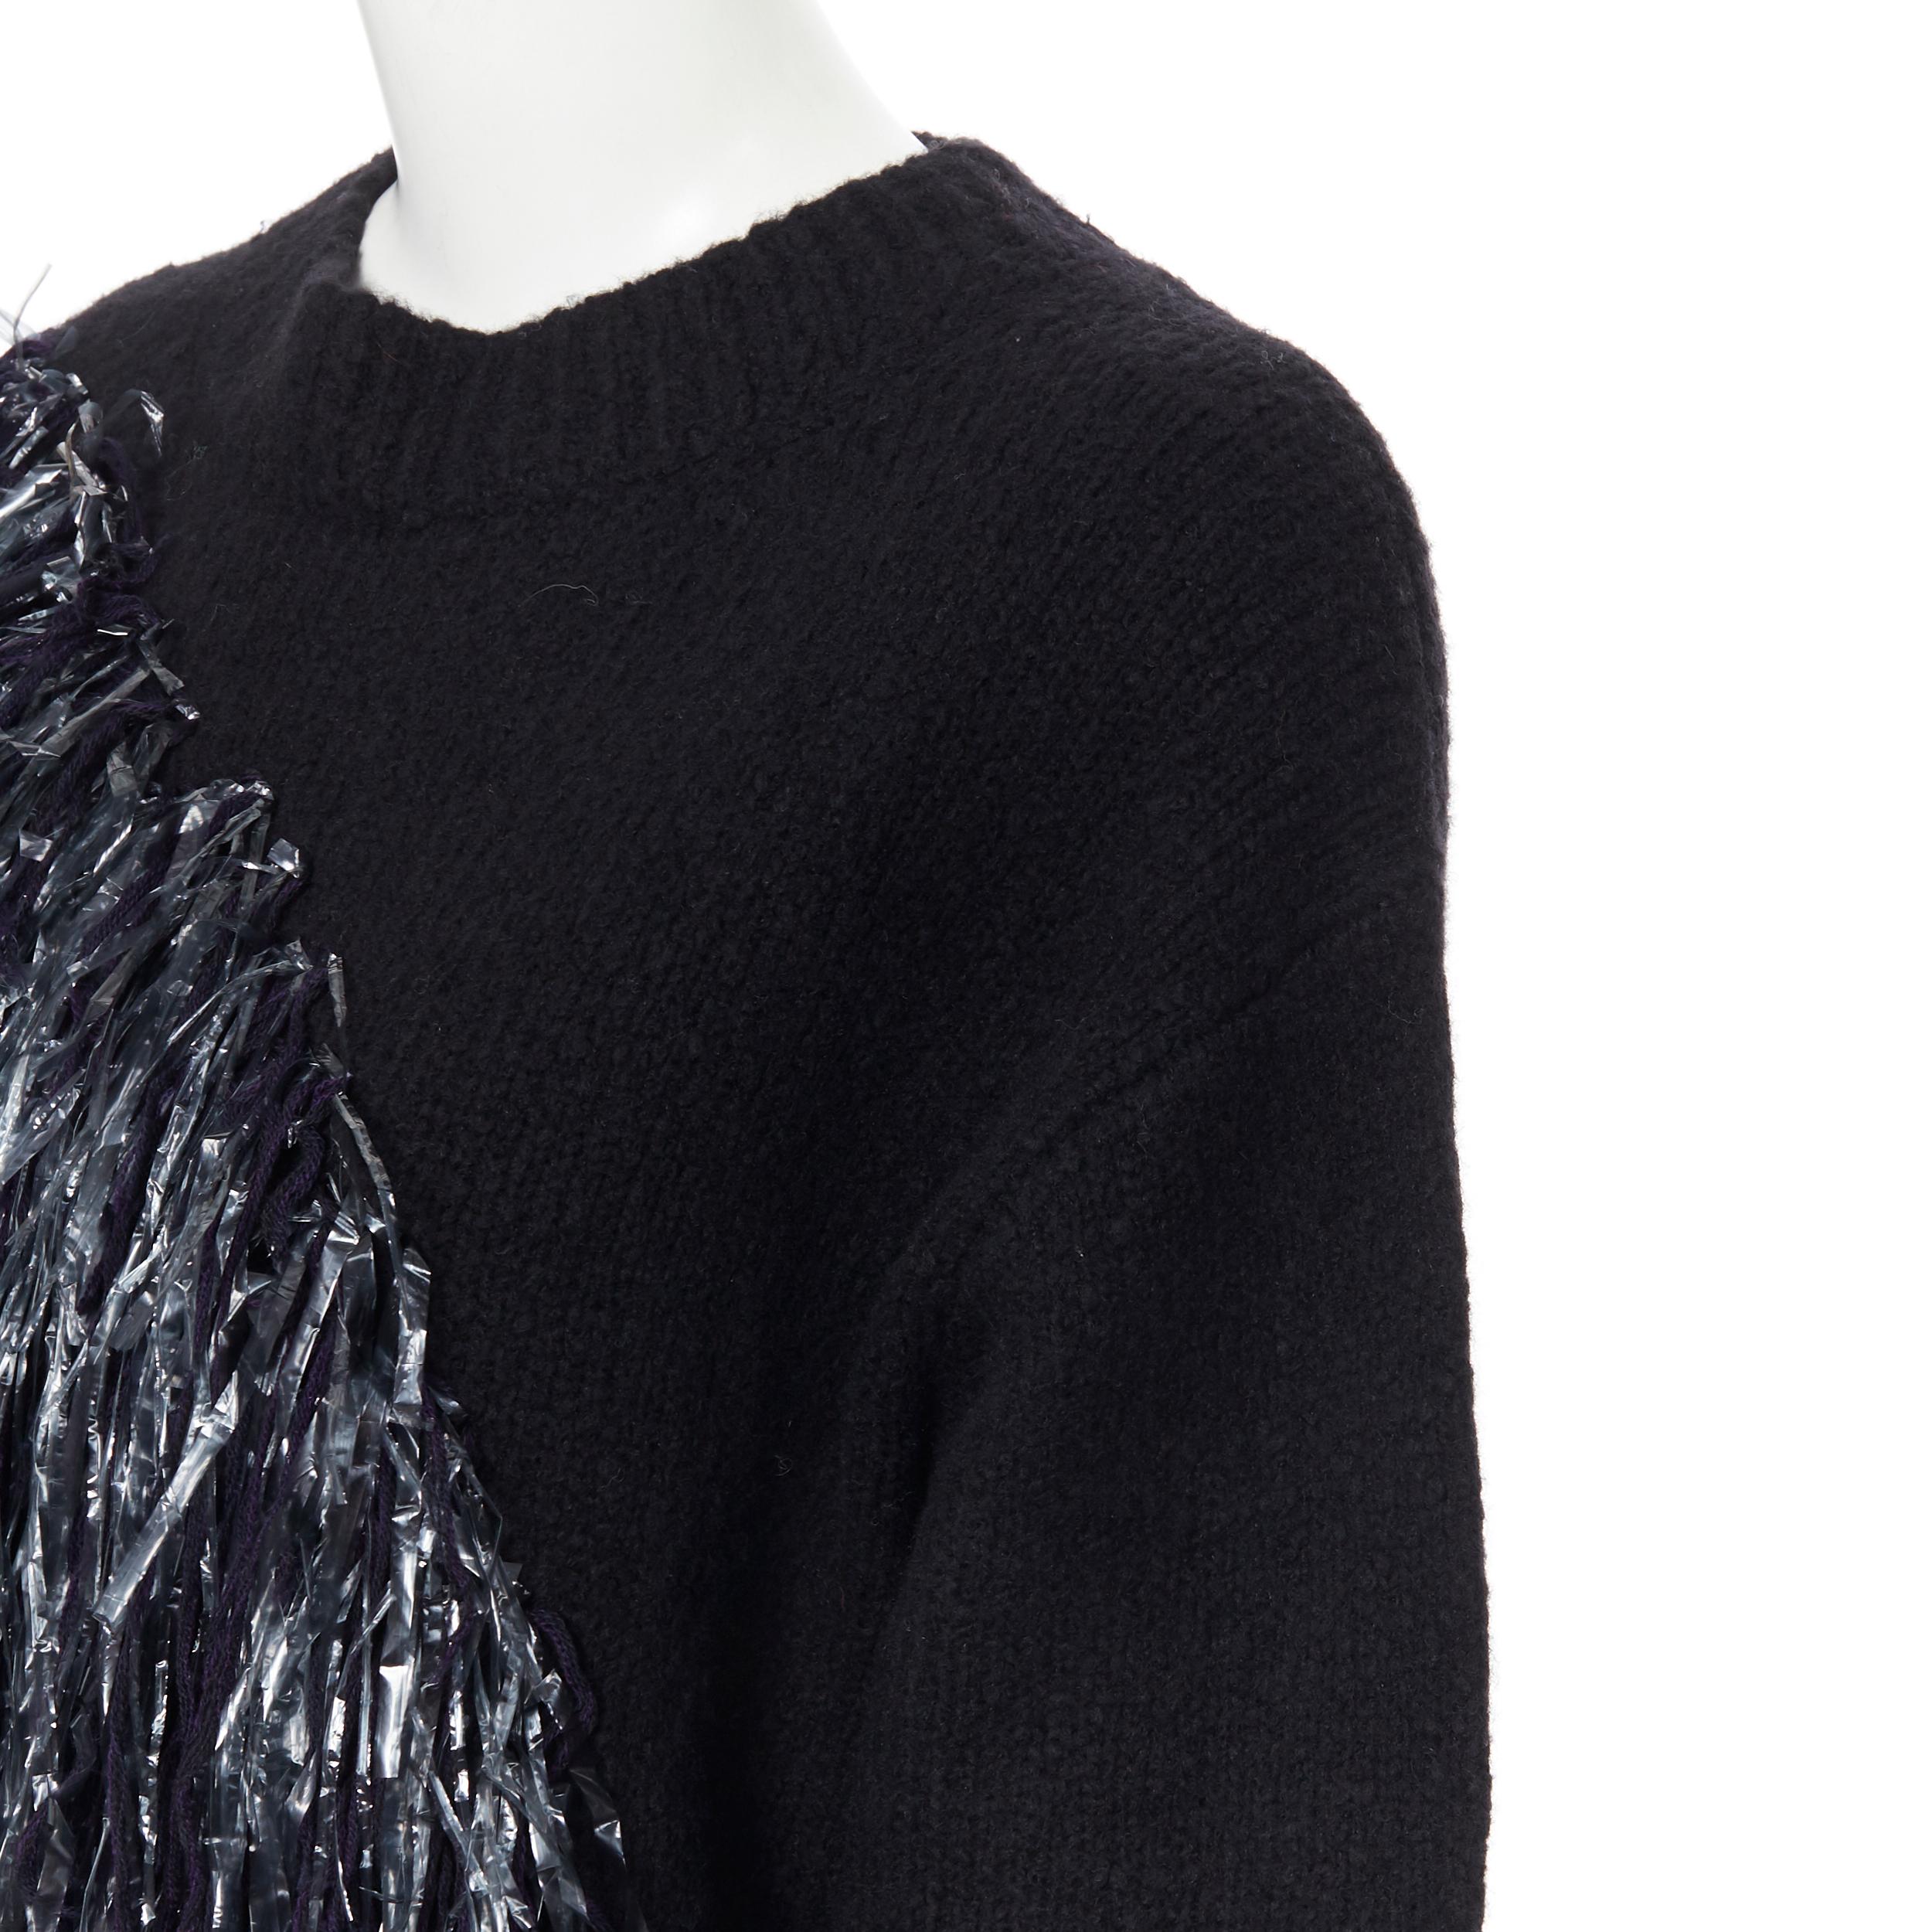 new DRIES VAN NOTEN AW18 merino wool cashmere blend black fringe sweater XS 1